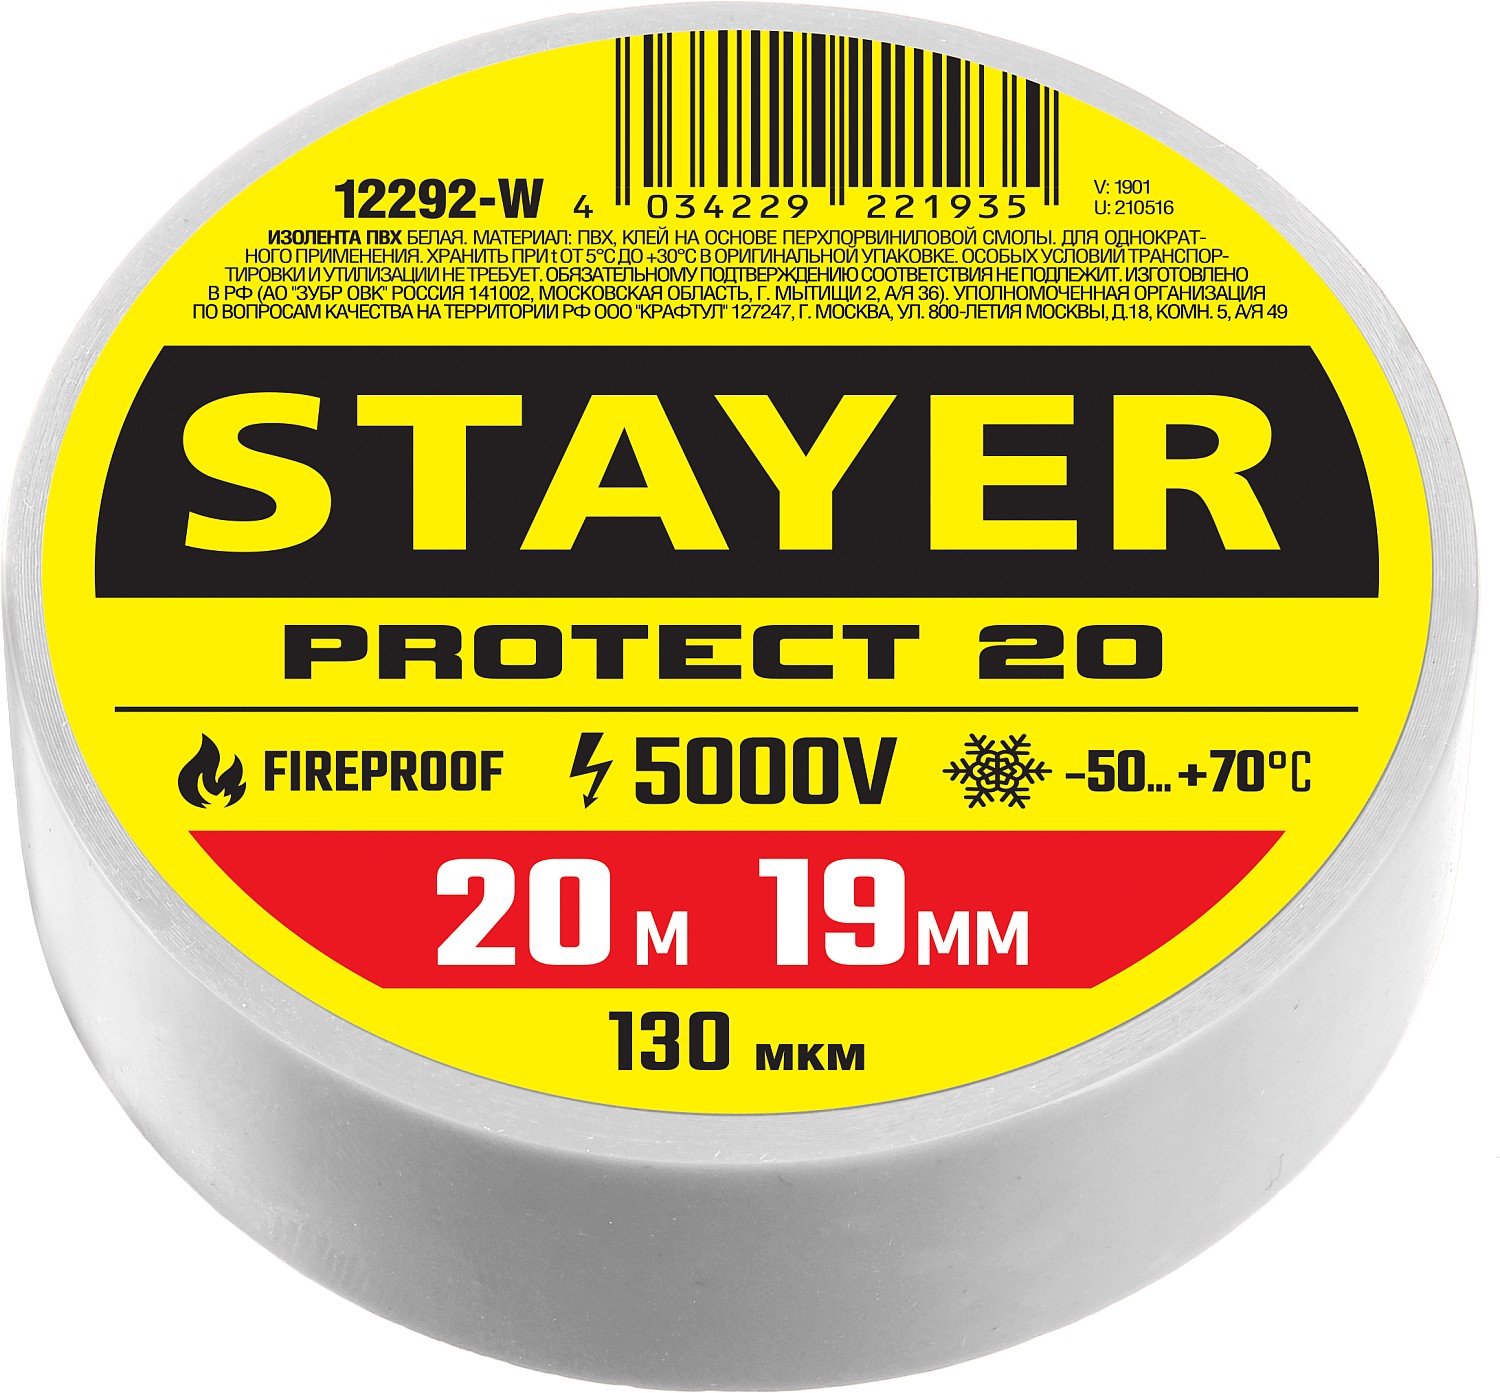 Изоляционная лента пвх STAYER Protect-20 19 мм х 20 м белая (12292-W)